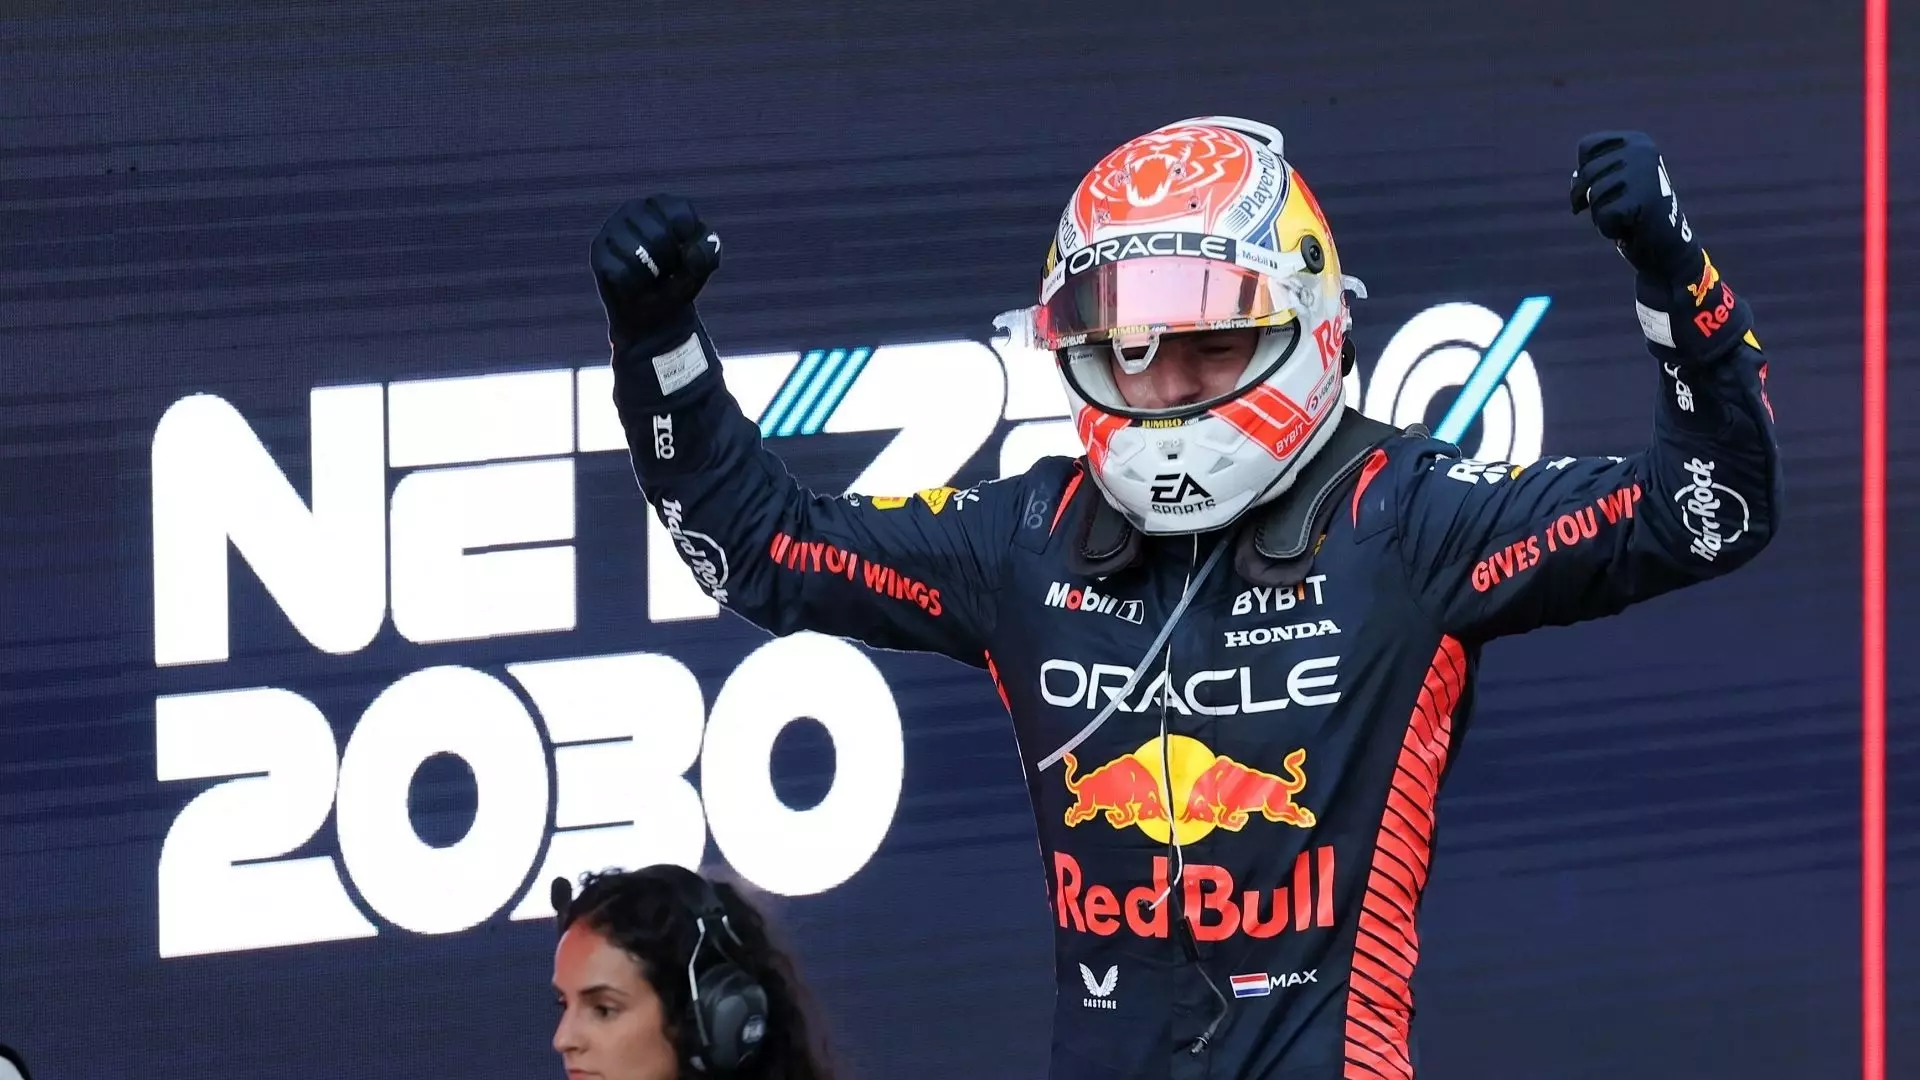 F1, Max Verstappen domina anche in Spagna. Debacle Ferrari